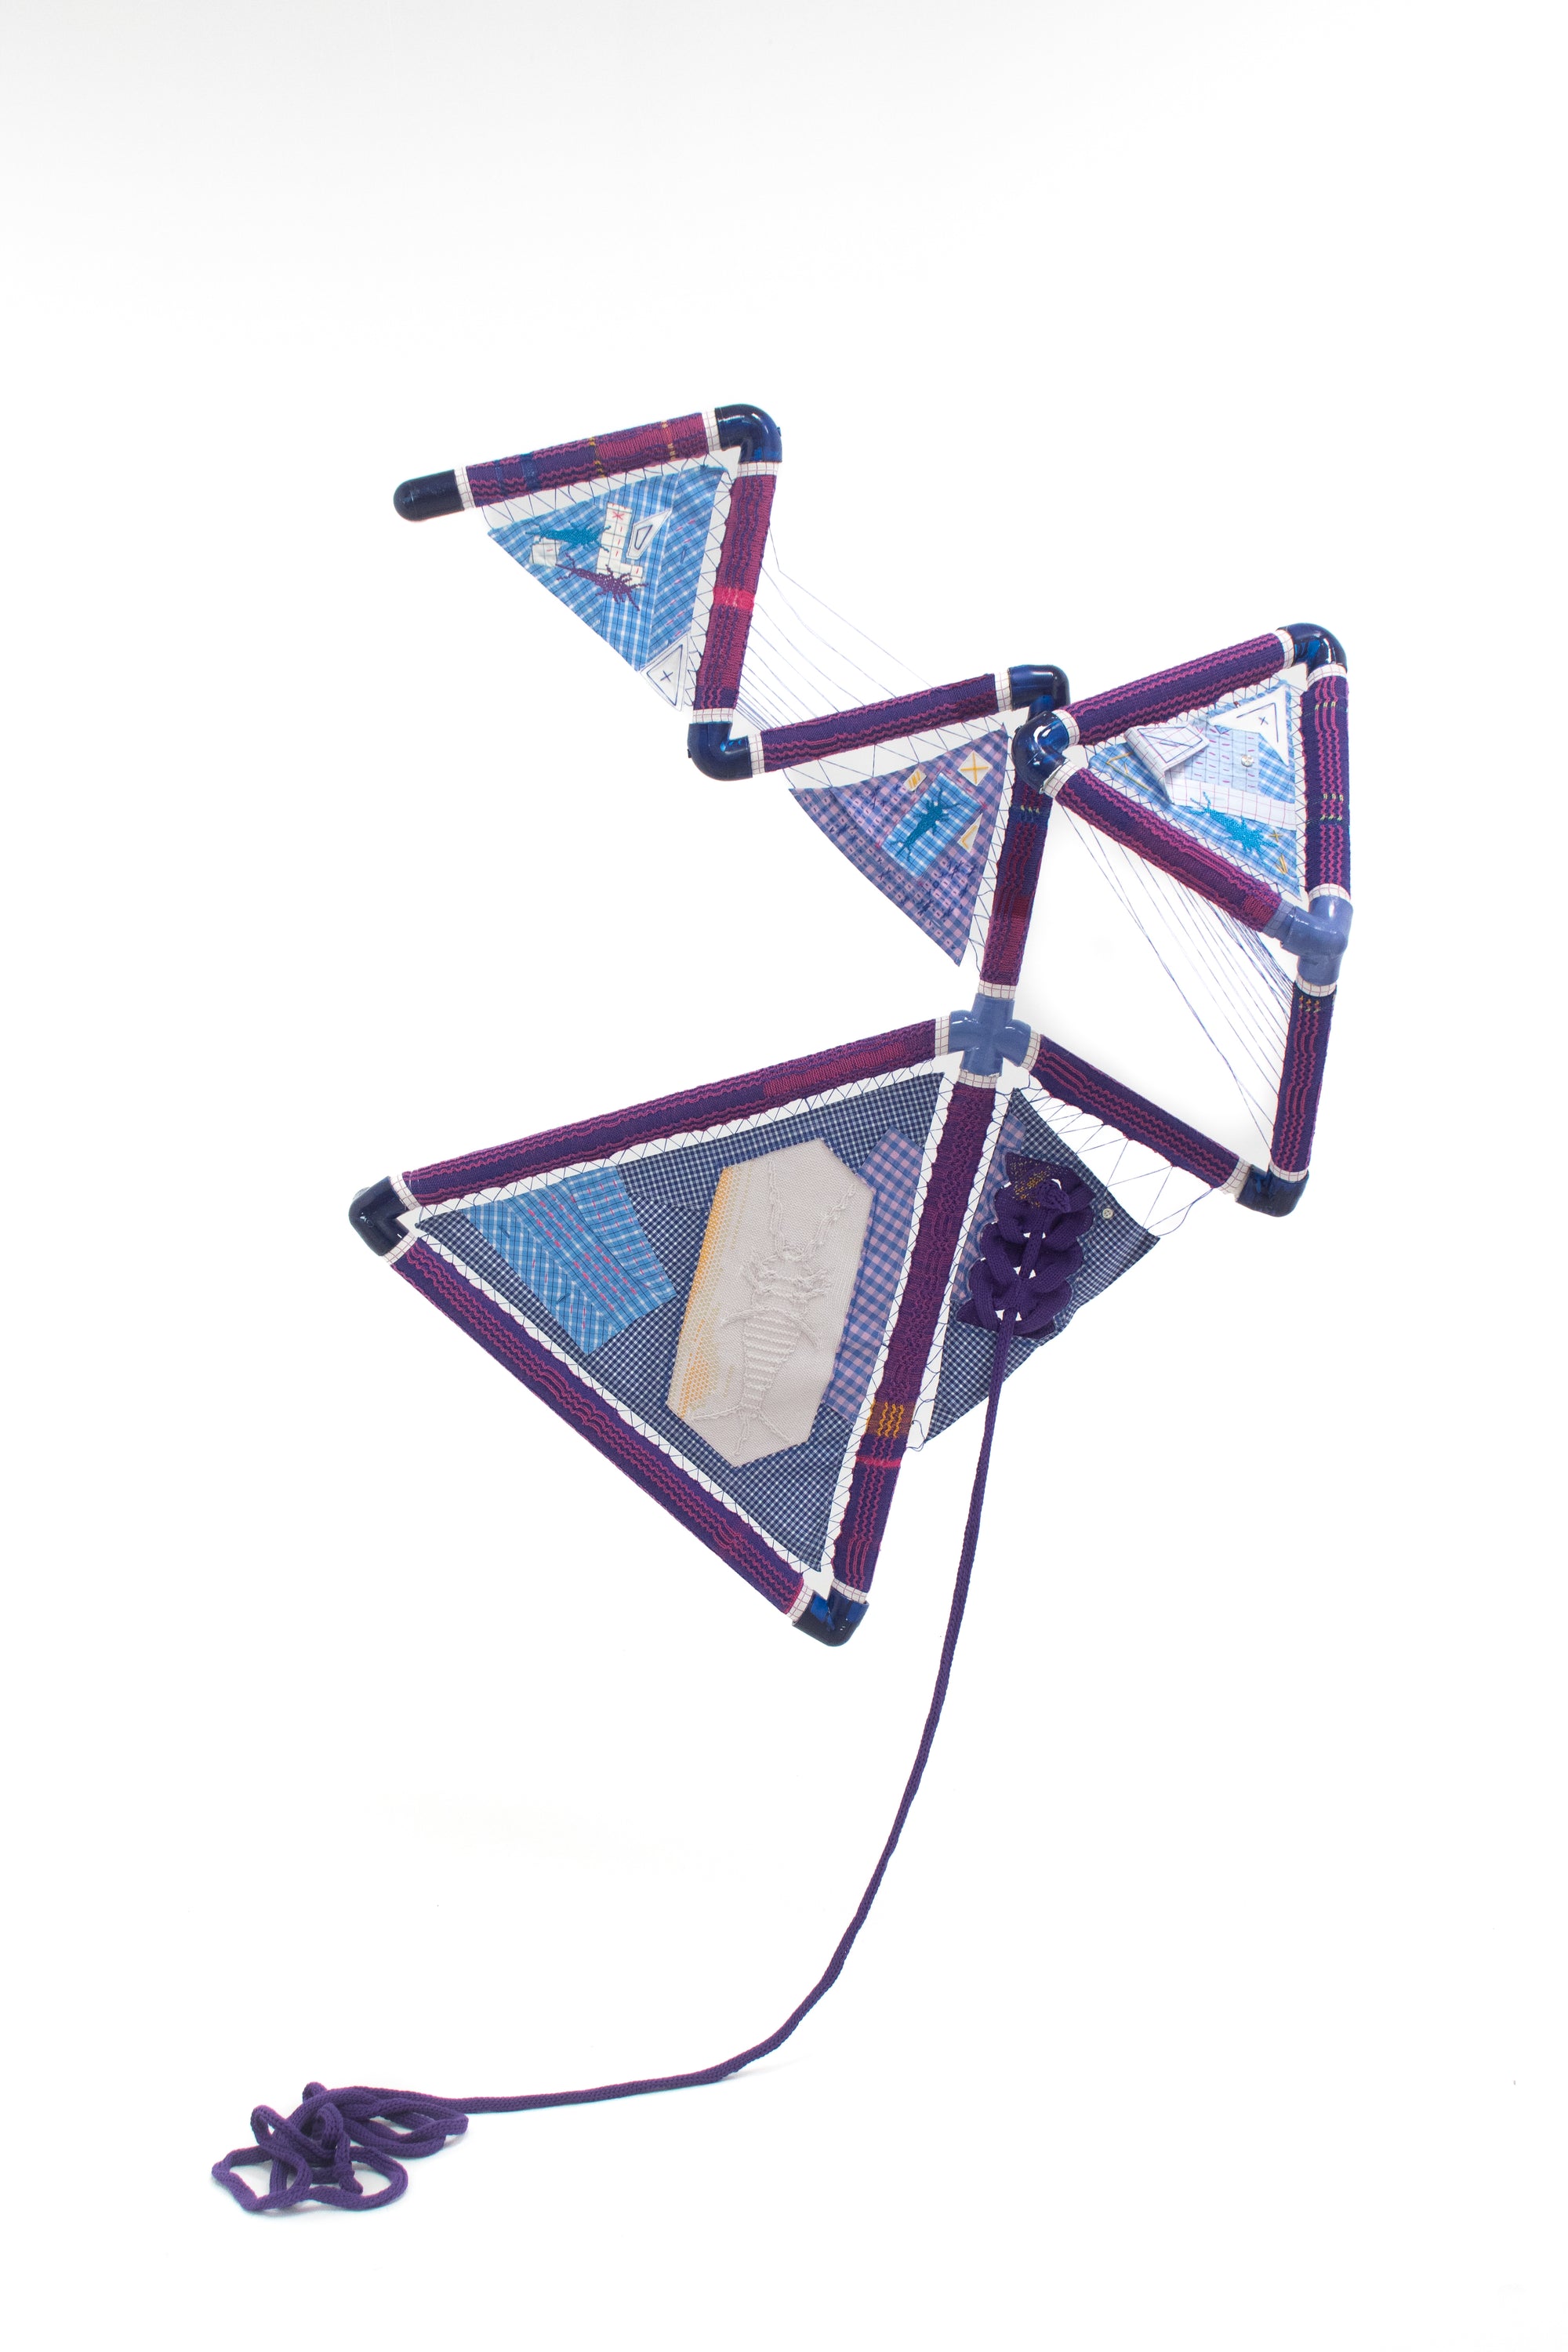 silverfish terminal [icosahedron]